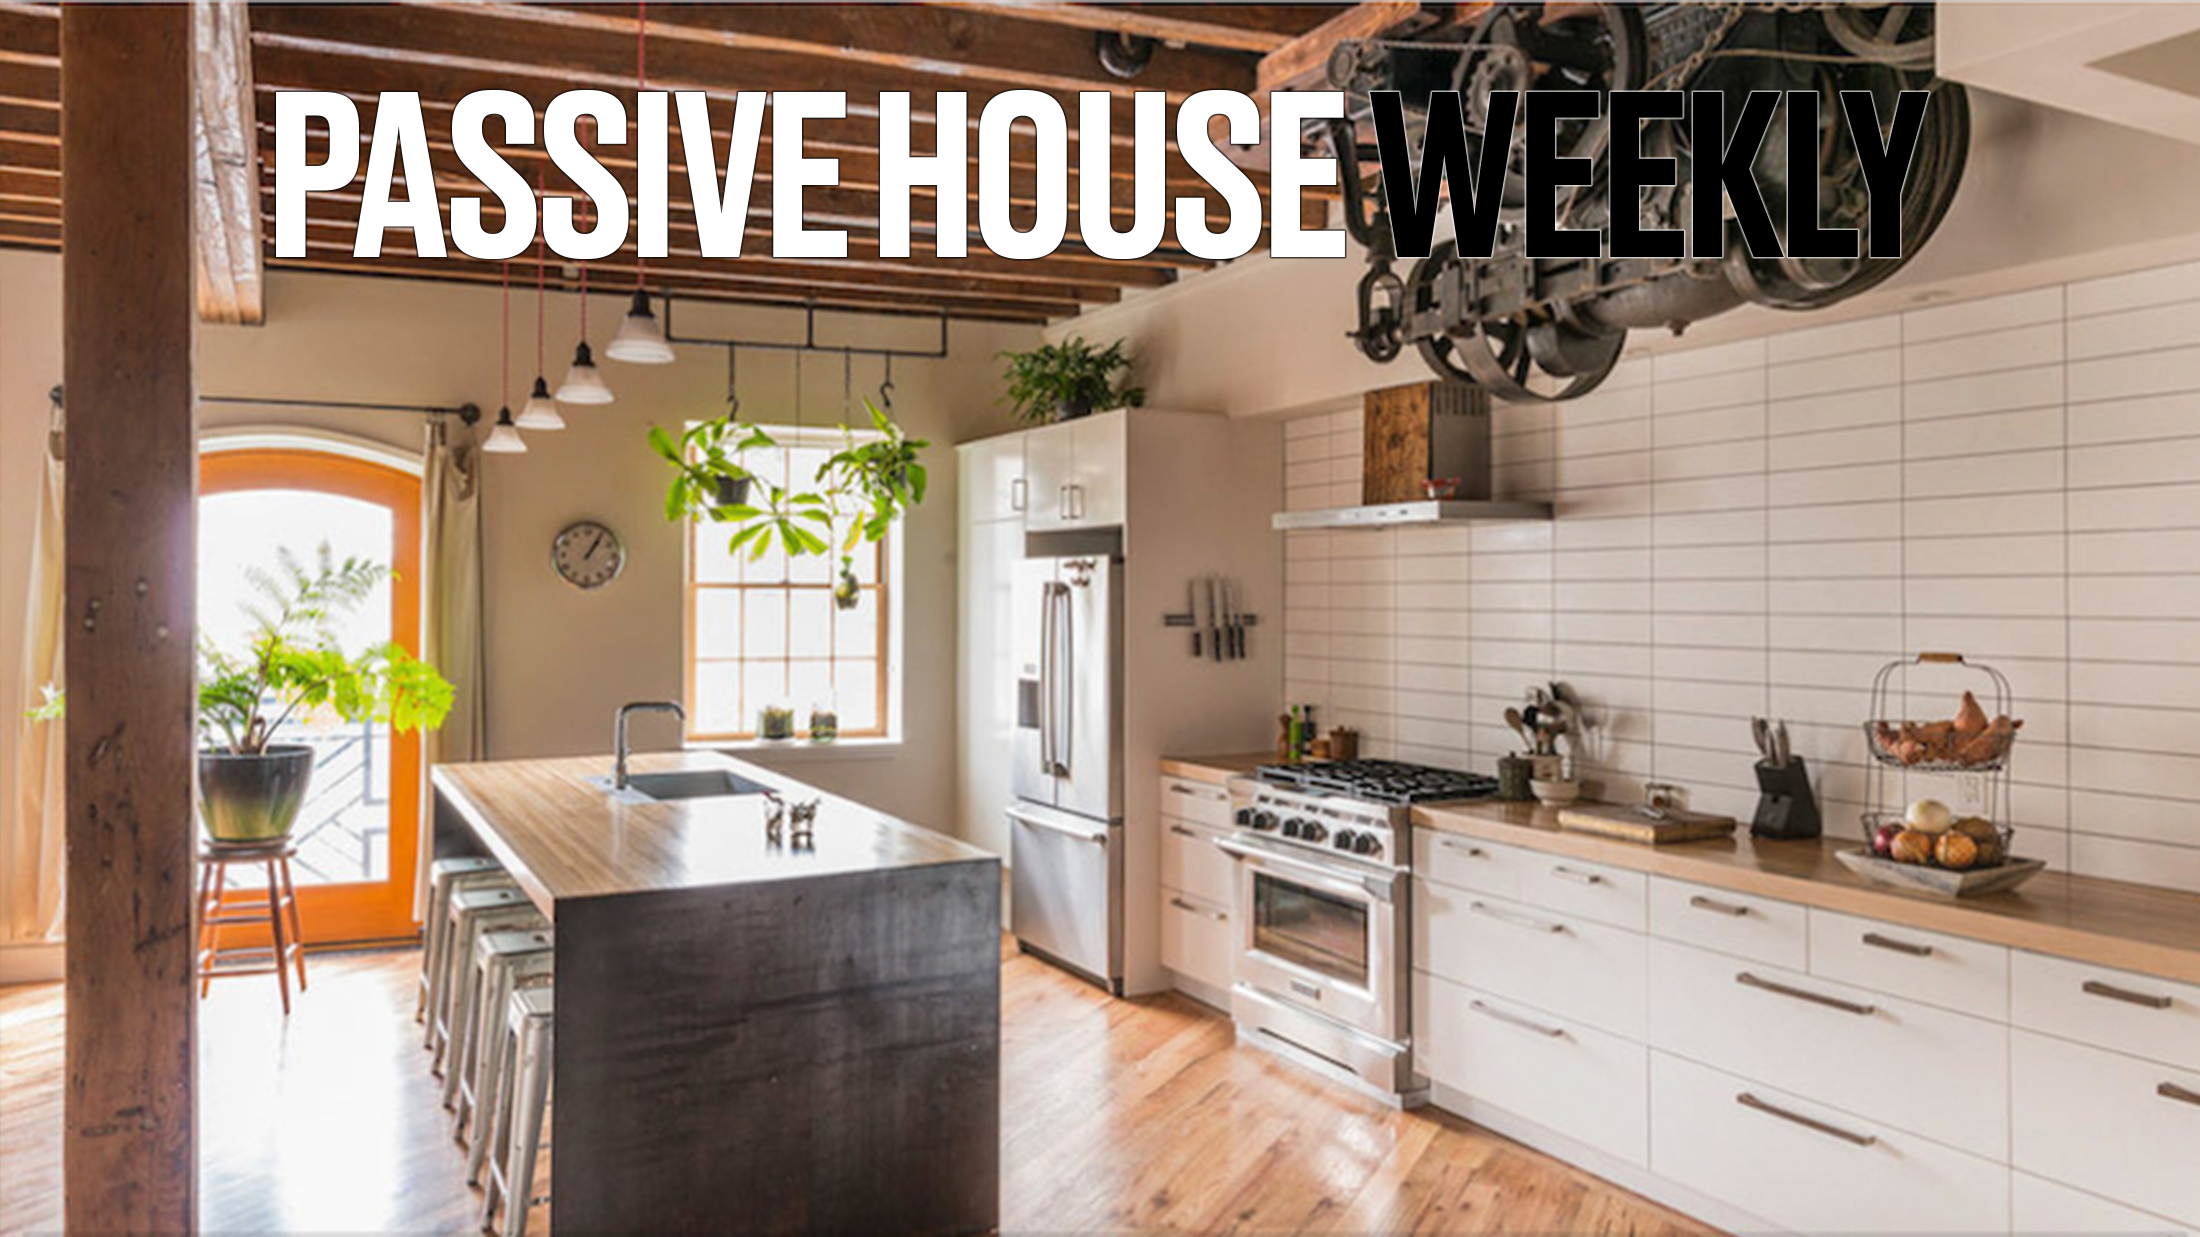 Passive House Weekly: May 2, 2022